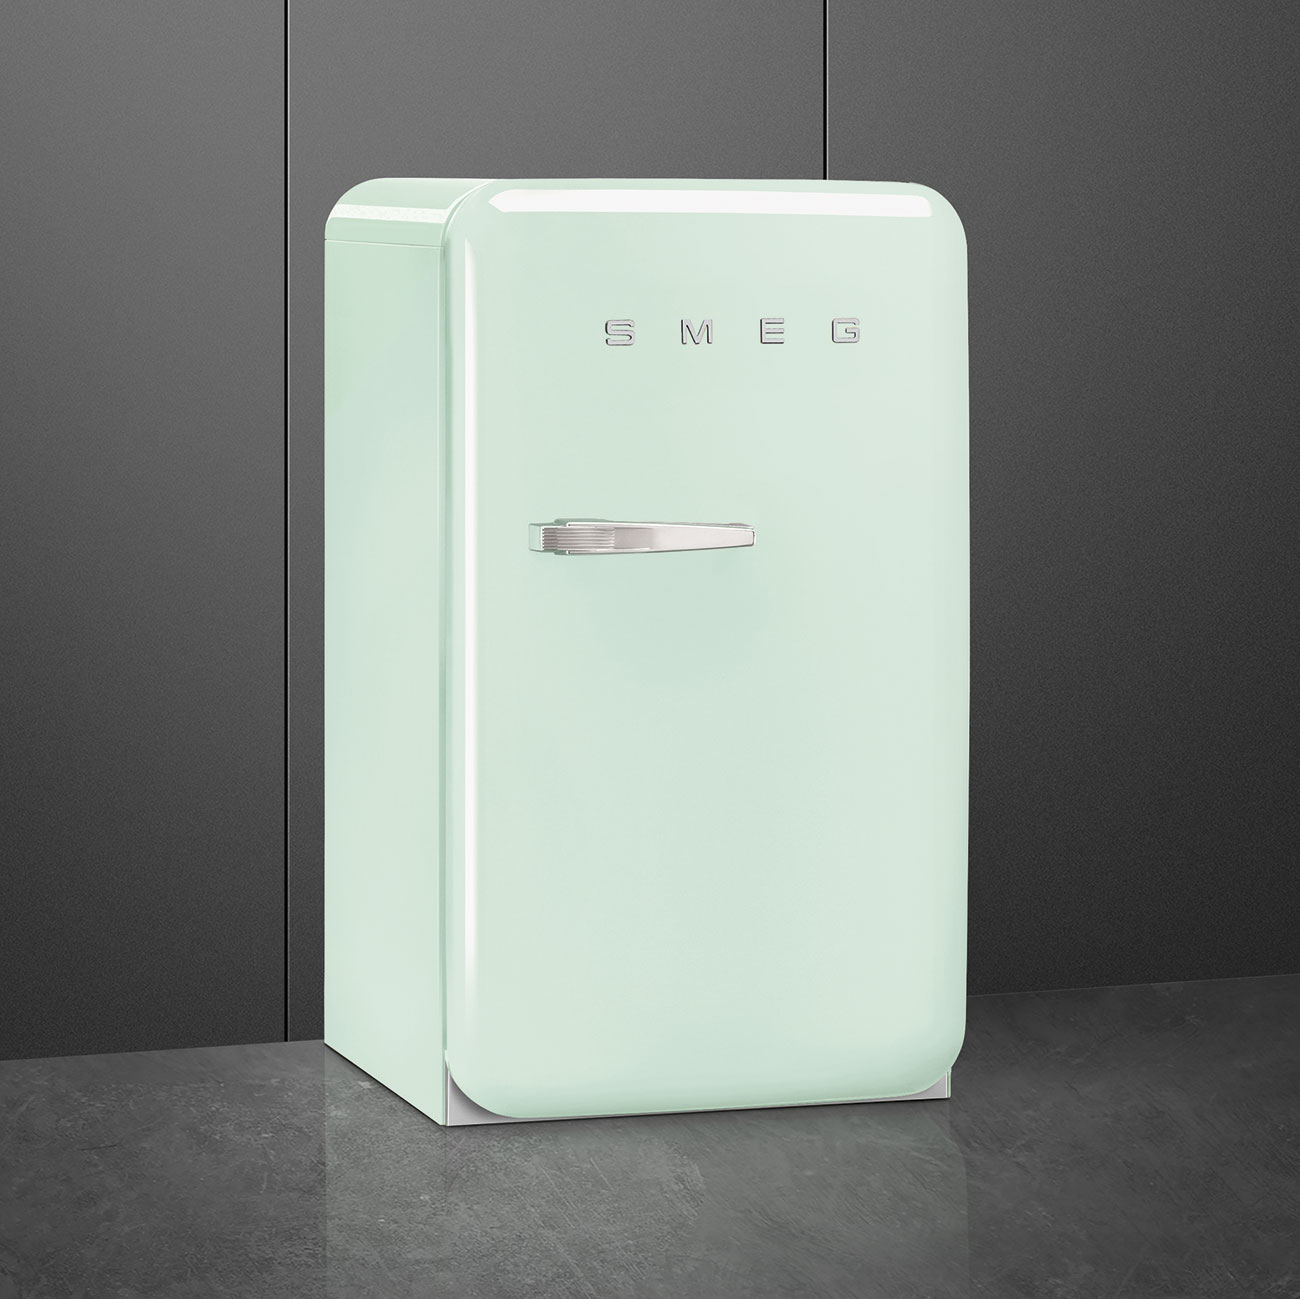 Pastel green refrigerator - Smeg_3